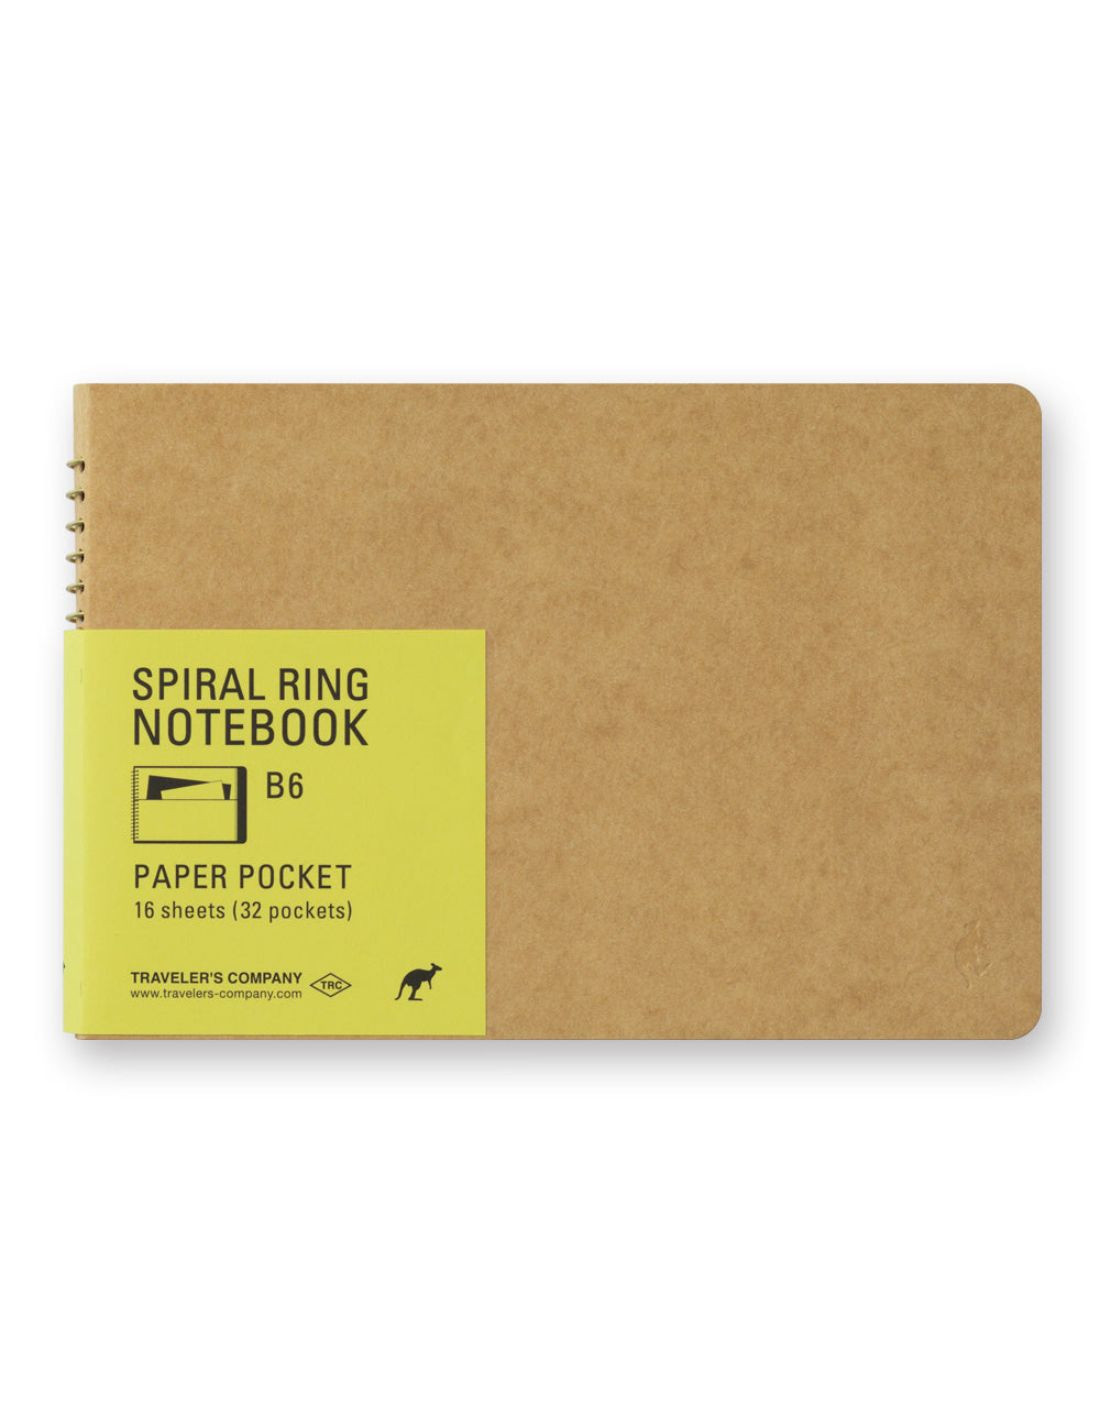 B6 Slim Paper Pocket - Spiral Ring Notebook - Traveler's Company